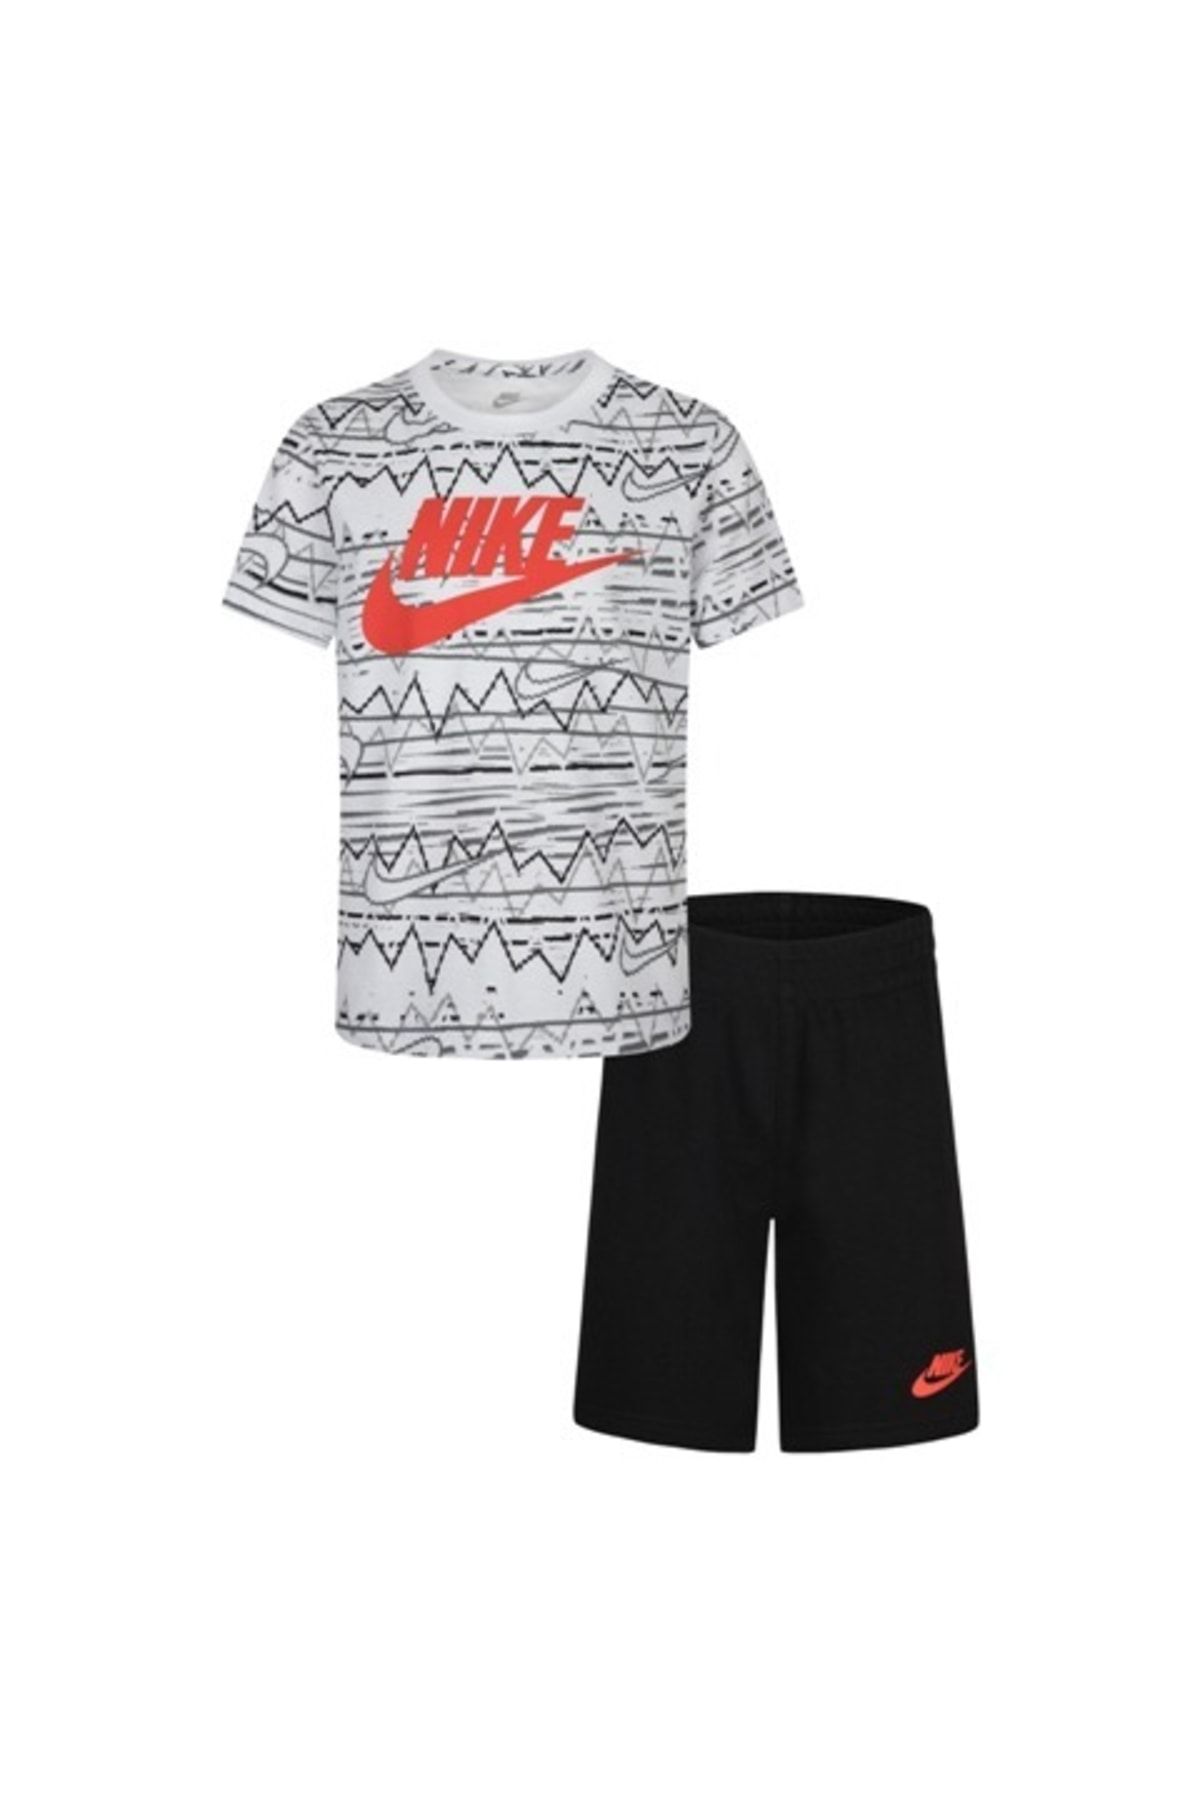 Nike Nkb B Nsw Be Real Aop Short Set Erkek Tişört-şort Takım 86k513-023